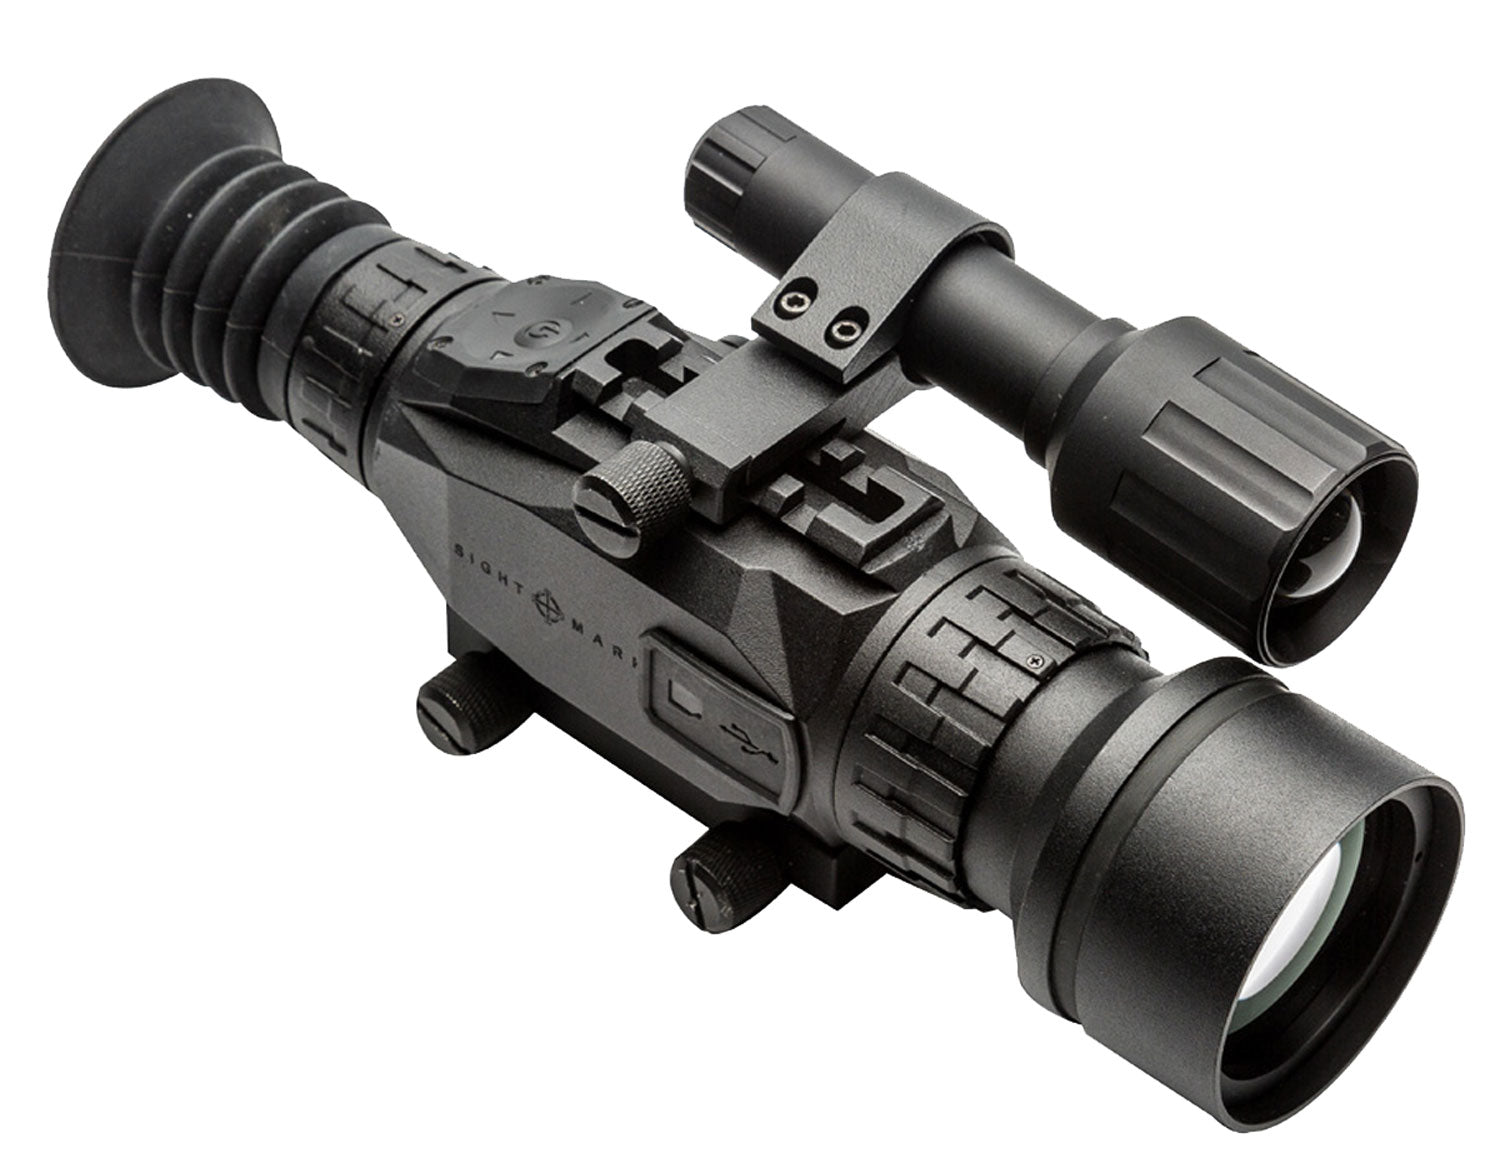 Sightmark Wraith HD Night Vision Riflescope